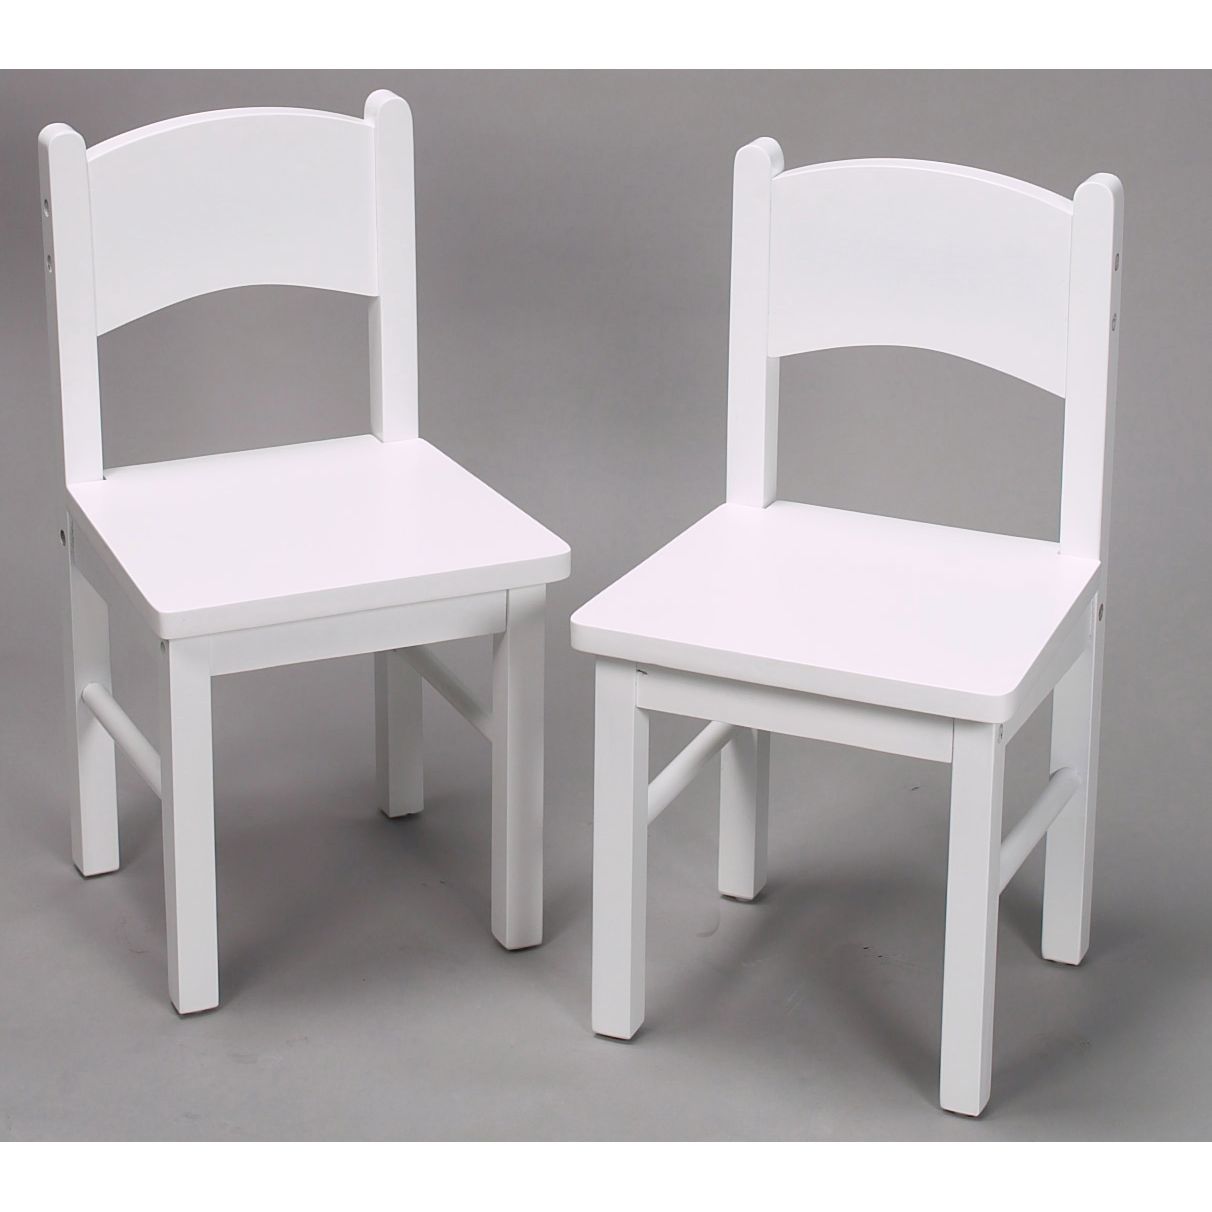 Gift Mark 2 Pair Chair Set (White)